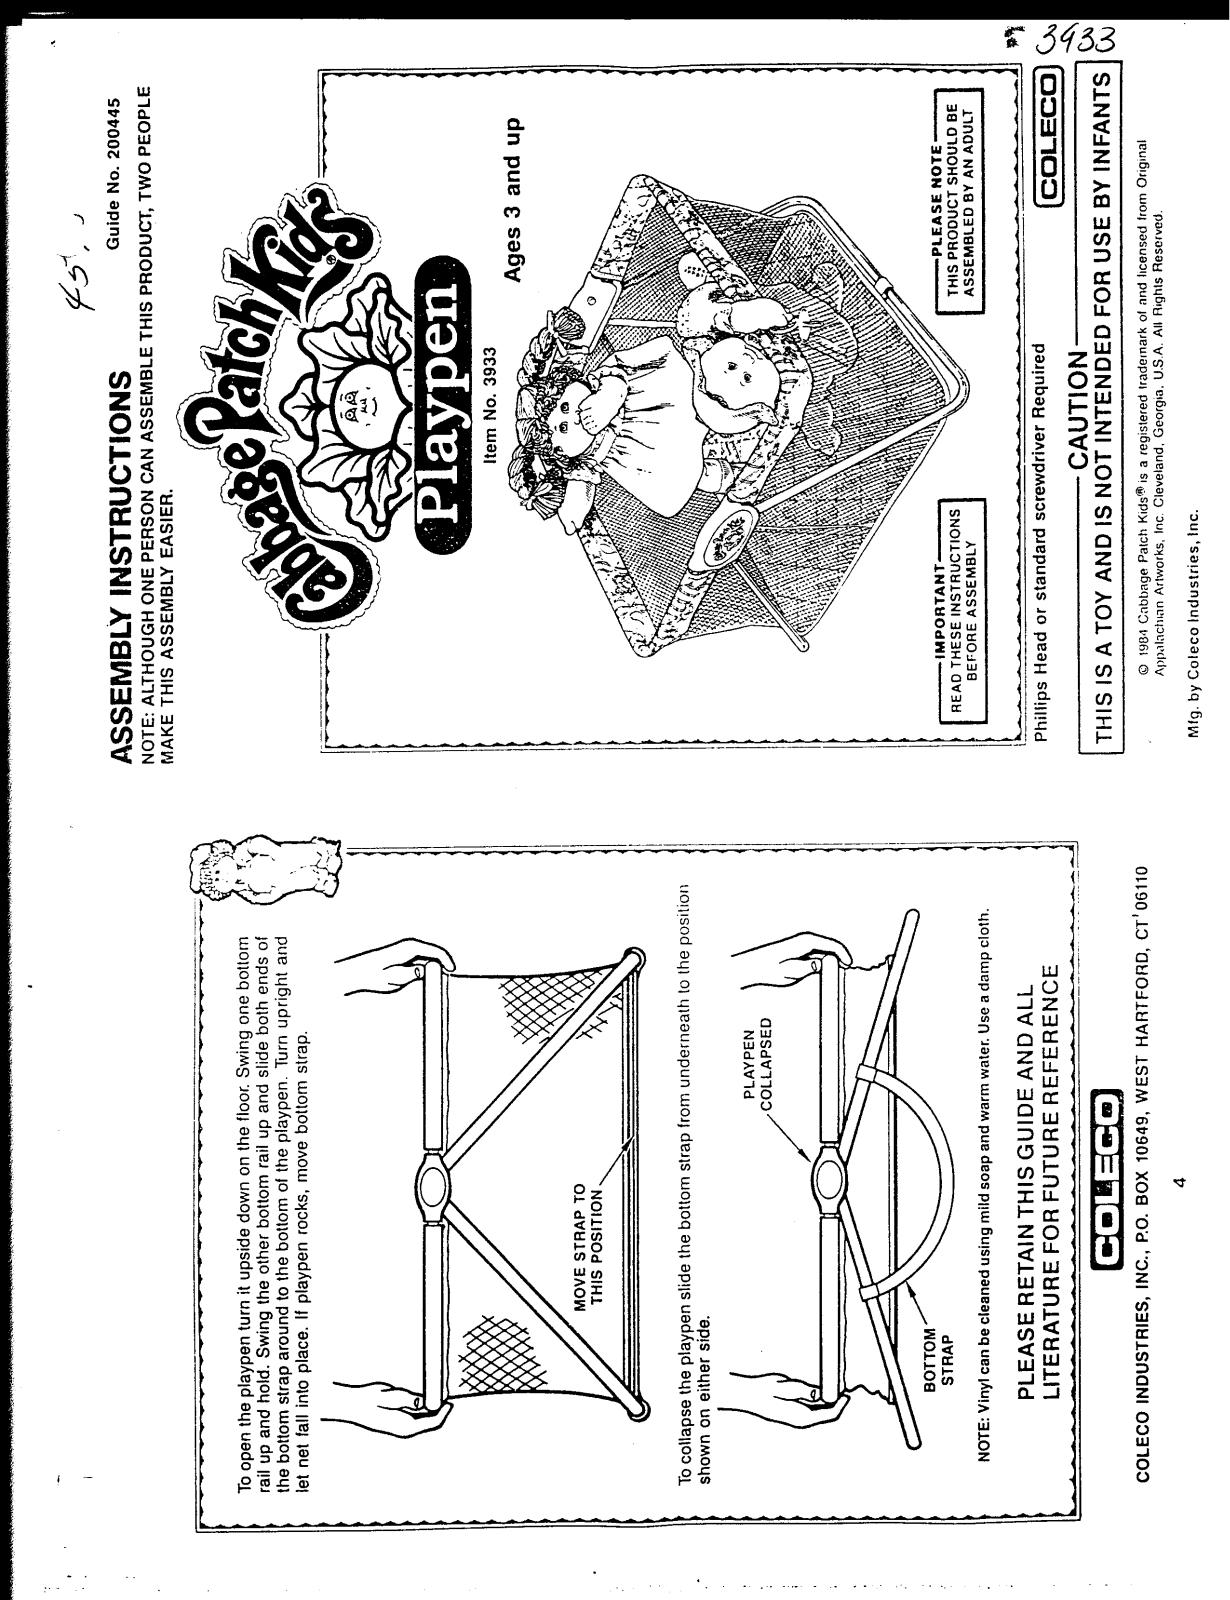 HASBRO Cabbage Patch Kids Playpen User Manual